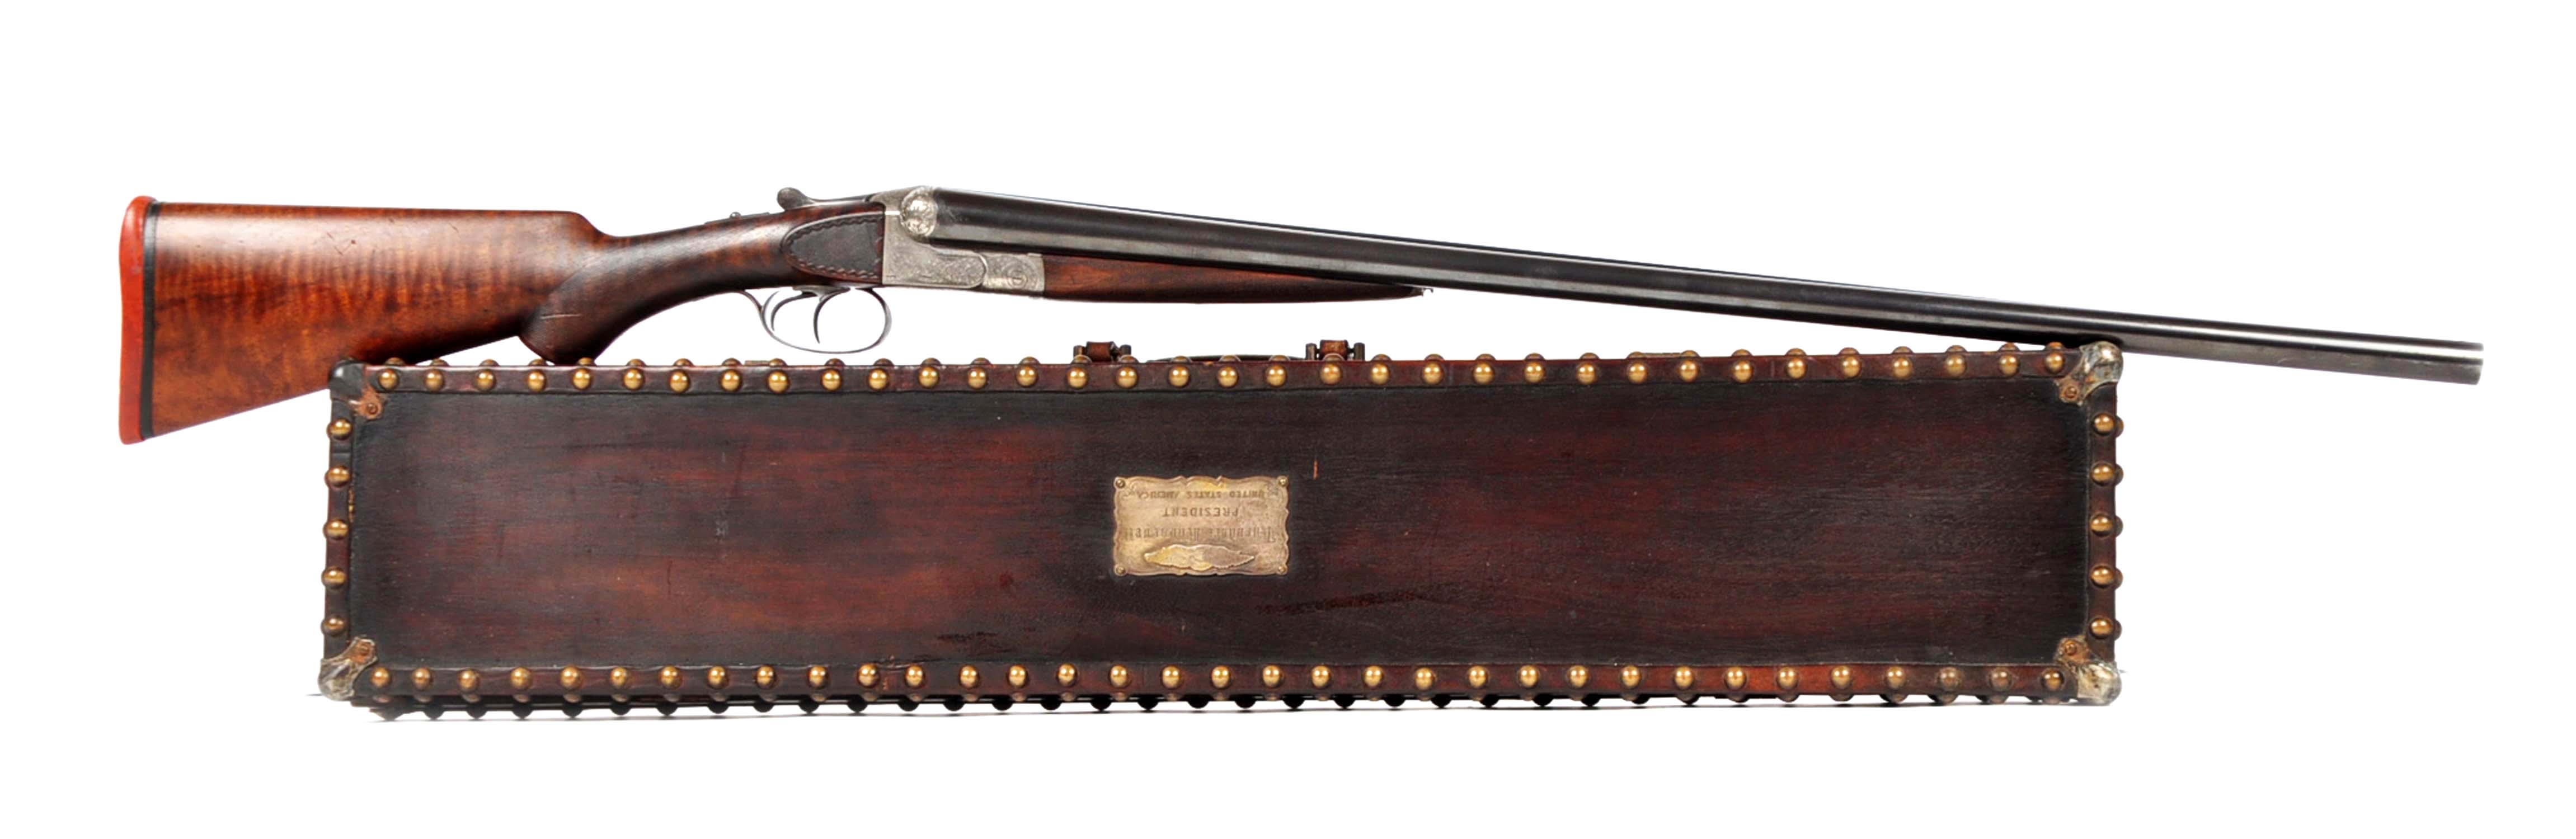 Francotte Grade A Trap Boxlock Shotgun Attributed to Theodore Roosevelt, estimated at $30,000-50,000.